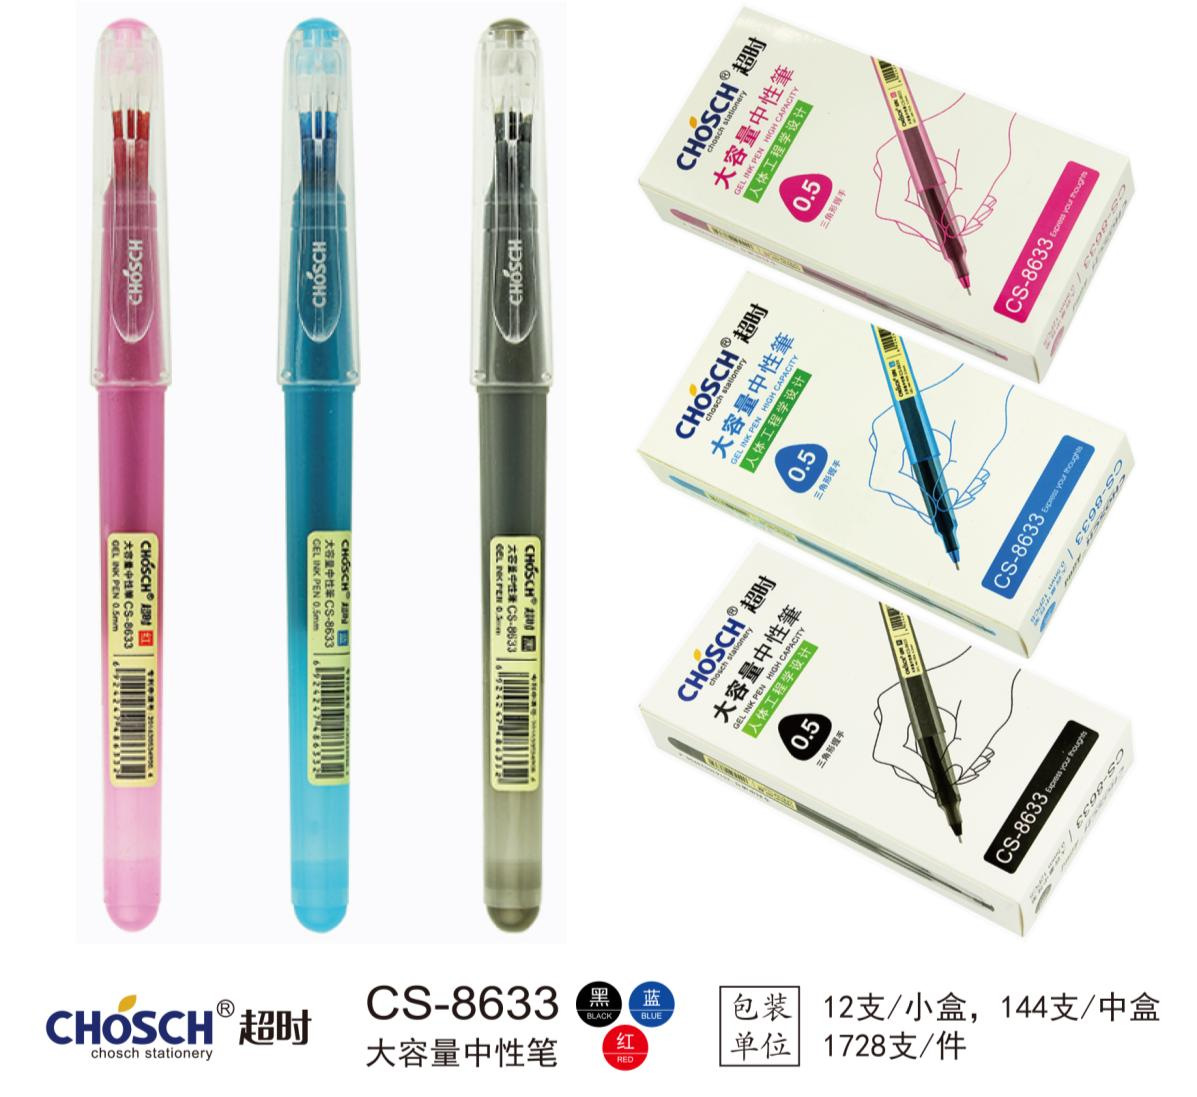 Timeout 8633 Triangular Pen 0.5mm Full Needle Tube Large Capacity Gel Pen Student Exam Writing Office Pen